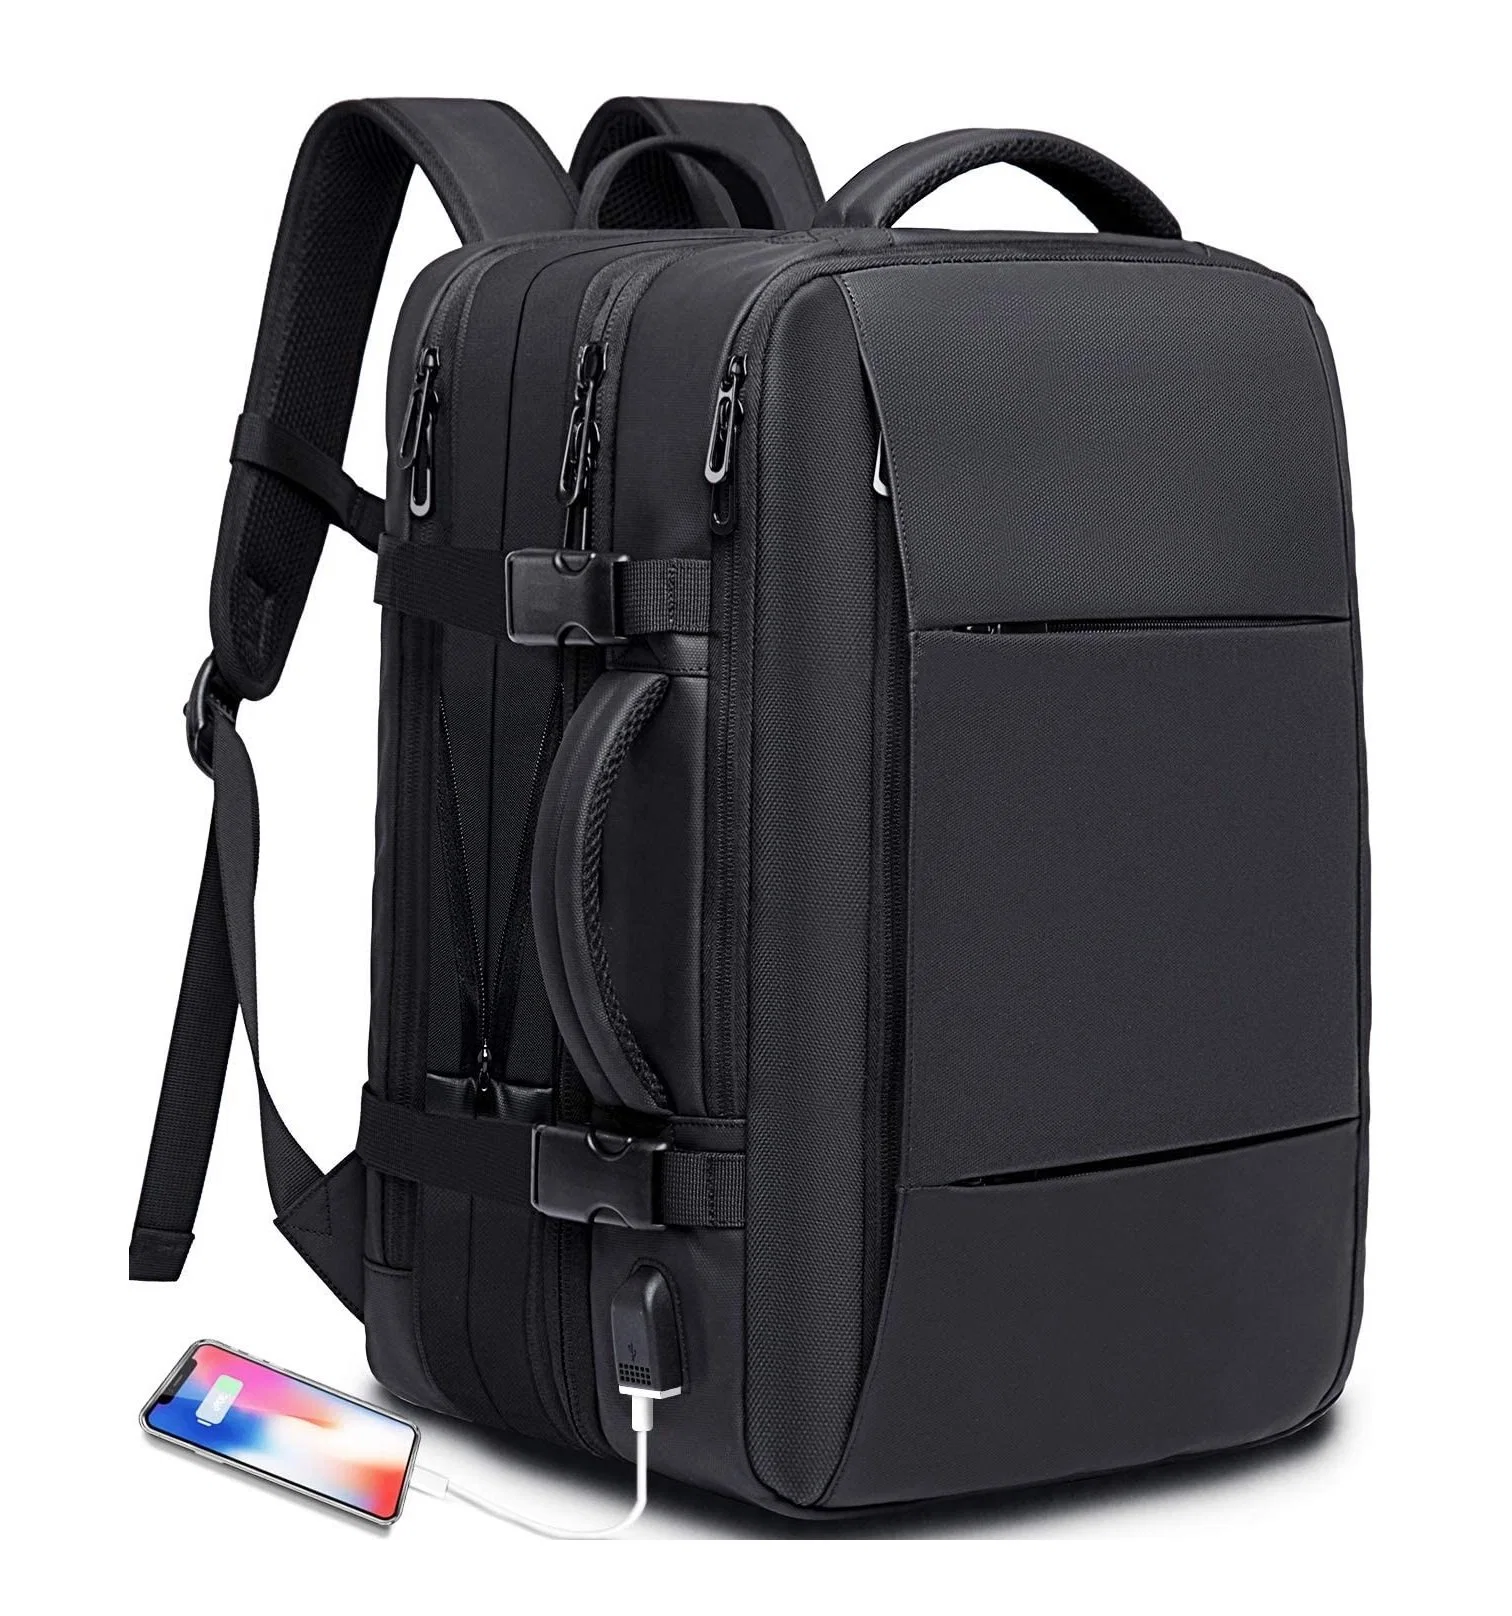 Mochila de viaje vuelo aprobado llevar mochila Bolsa de Viaje Internacional para la portátil resistente al agua mochilas